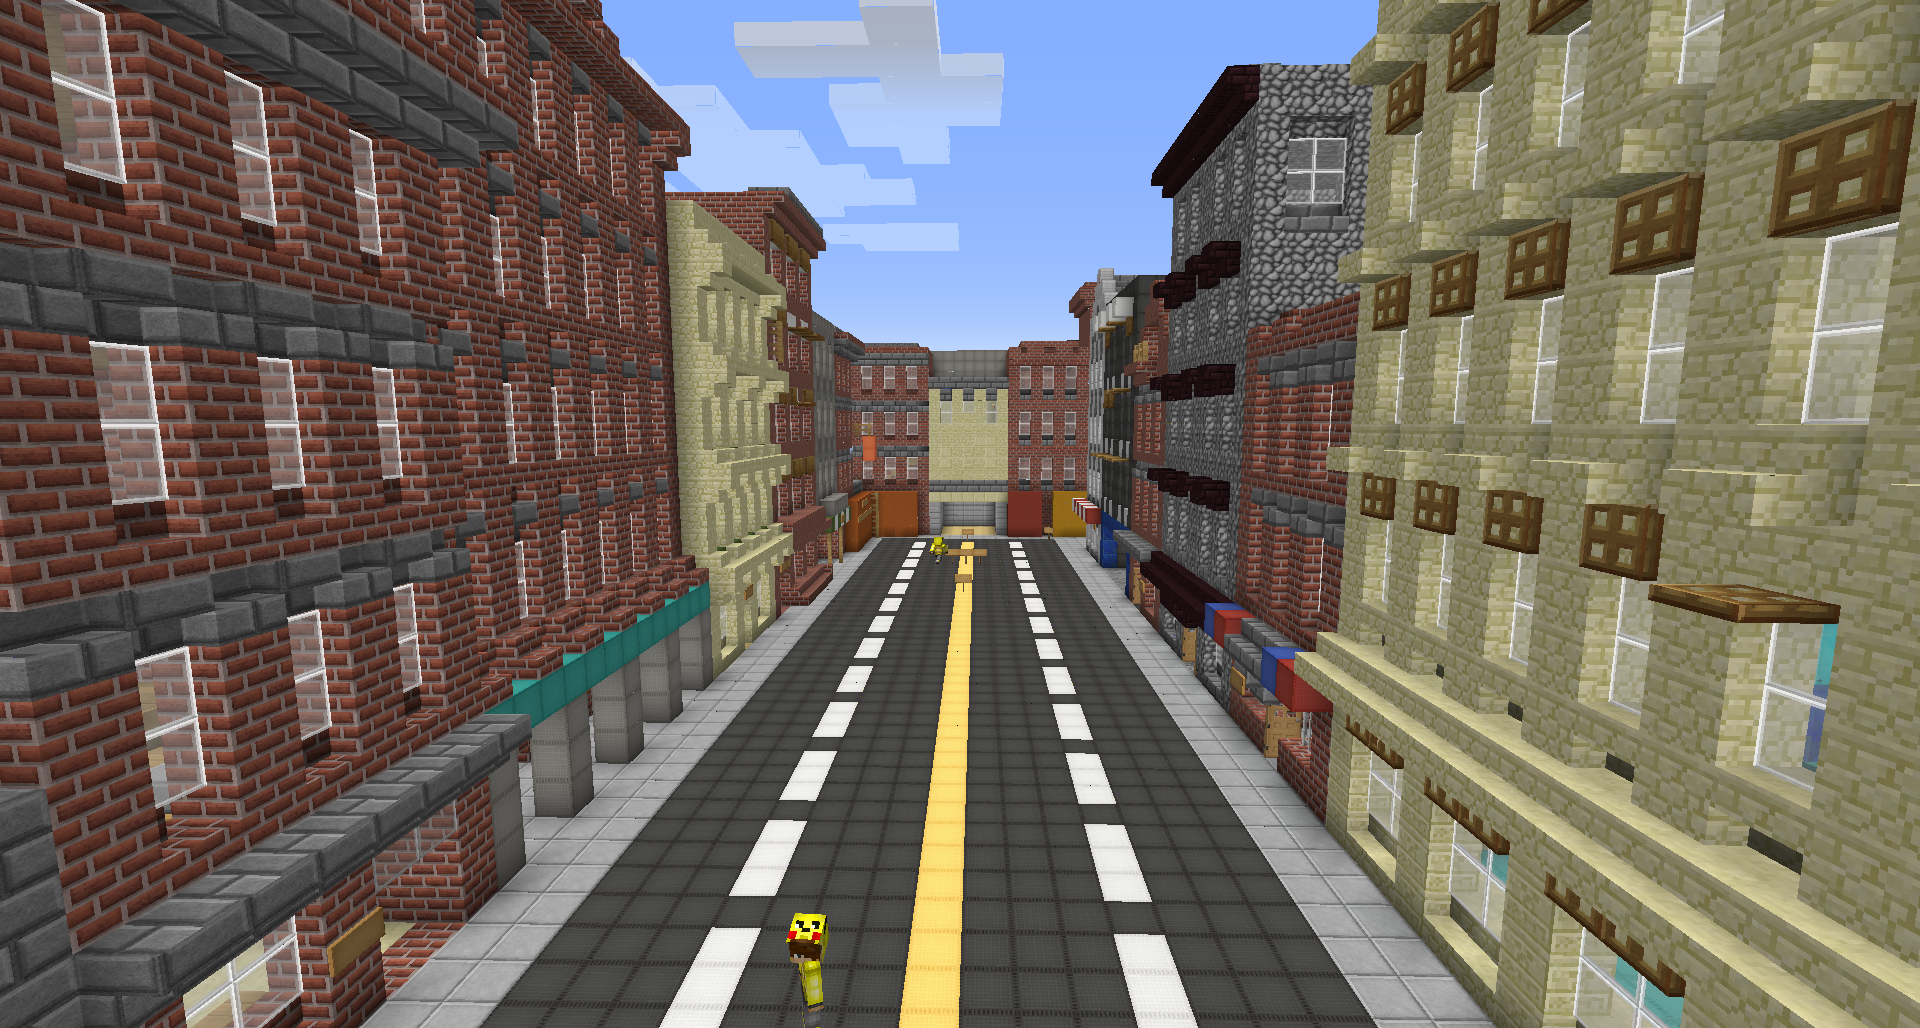 Grand Theft Auto III Map - Maps - Mapping and Modding: Java Edition -  Minecraft Forum - Minecraft Forum